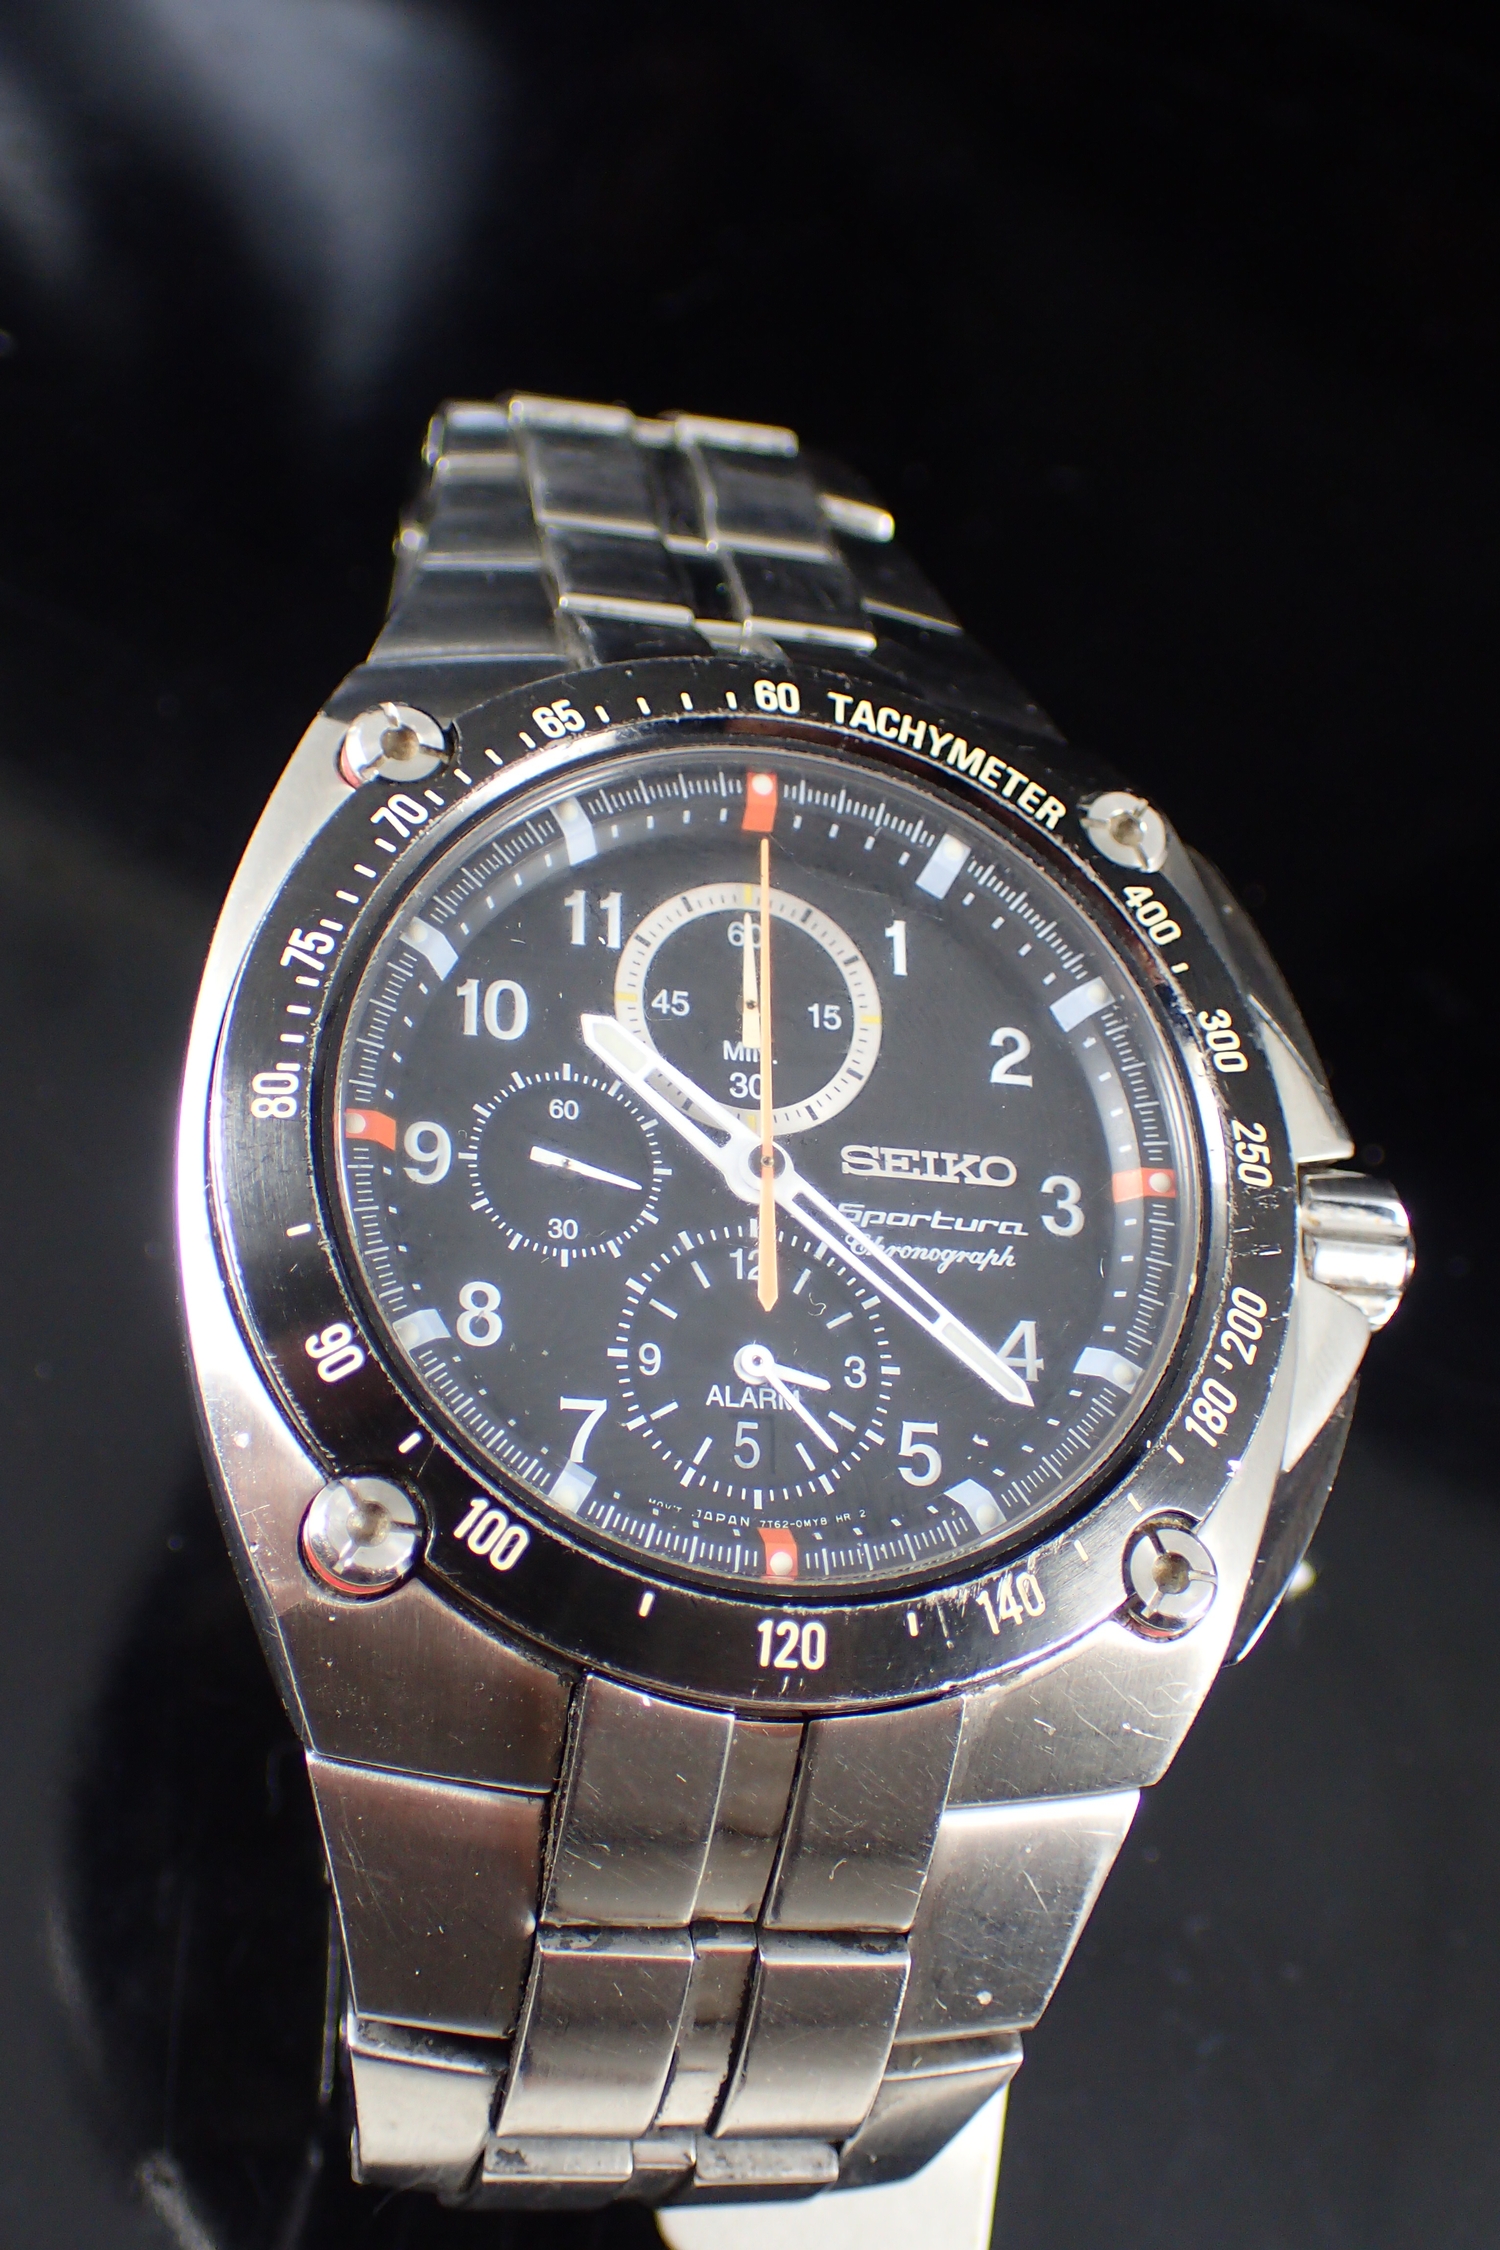 A gents Seiko Chronograph wrist watch